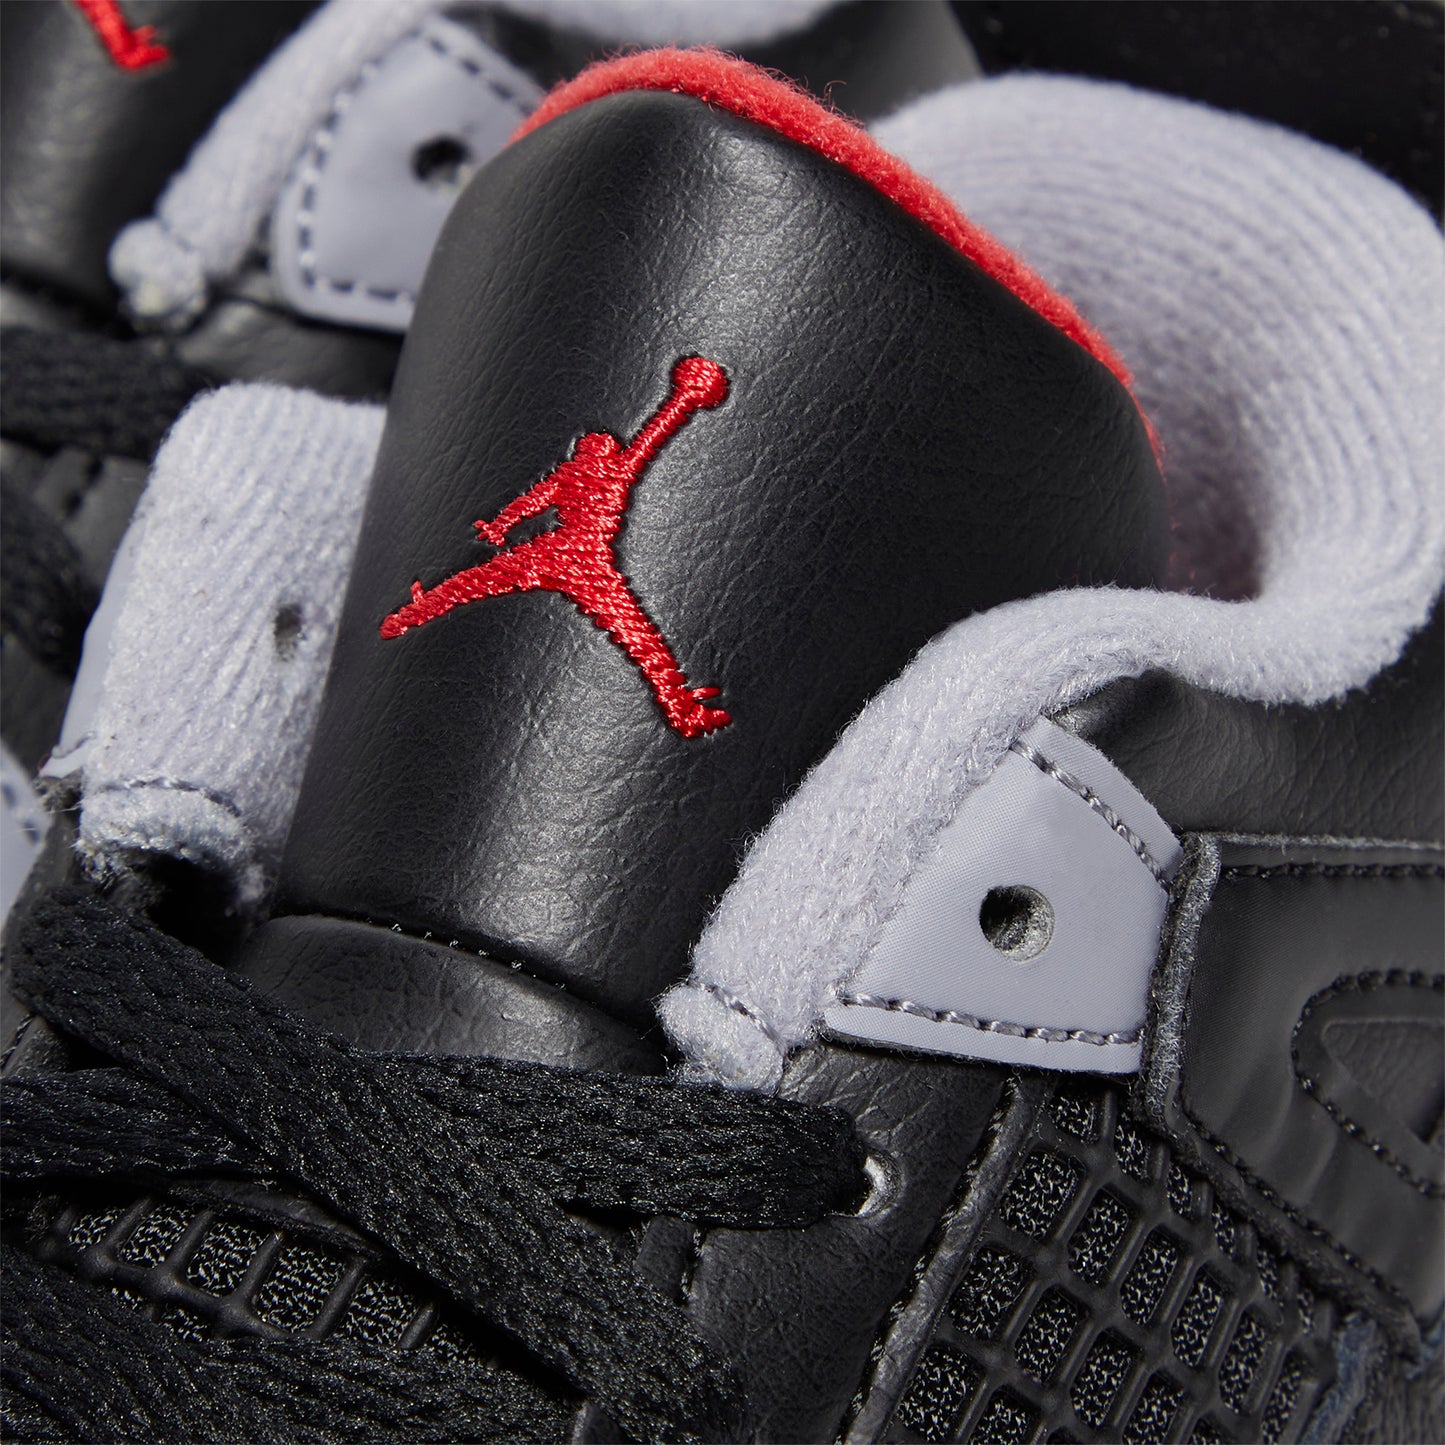 Nike Toddler Jordan 4 Retro (Black/Fire Red/Cement Grey/Summit White)